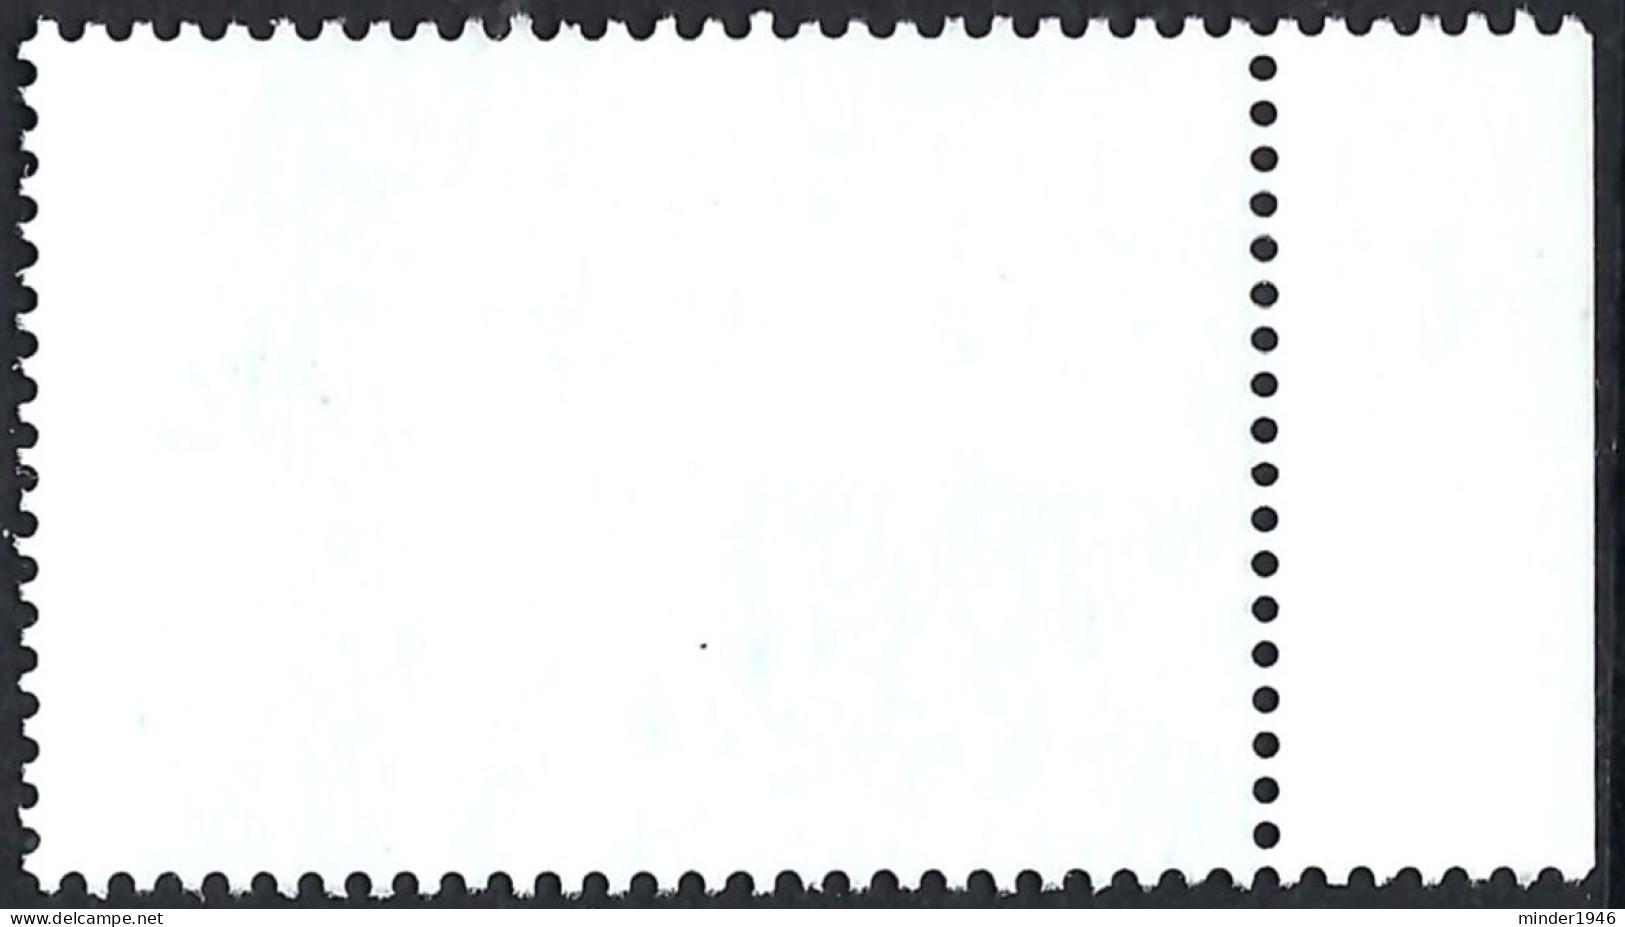 AUSTRALIAN ANTARCTIC TERRITORY (AAT) 1999 QEII 90c Multicoloured, Mawson's-Huskies & Hut SG128 FU With Side Gutter - Used Stamps